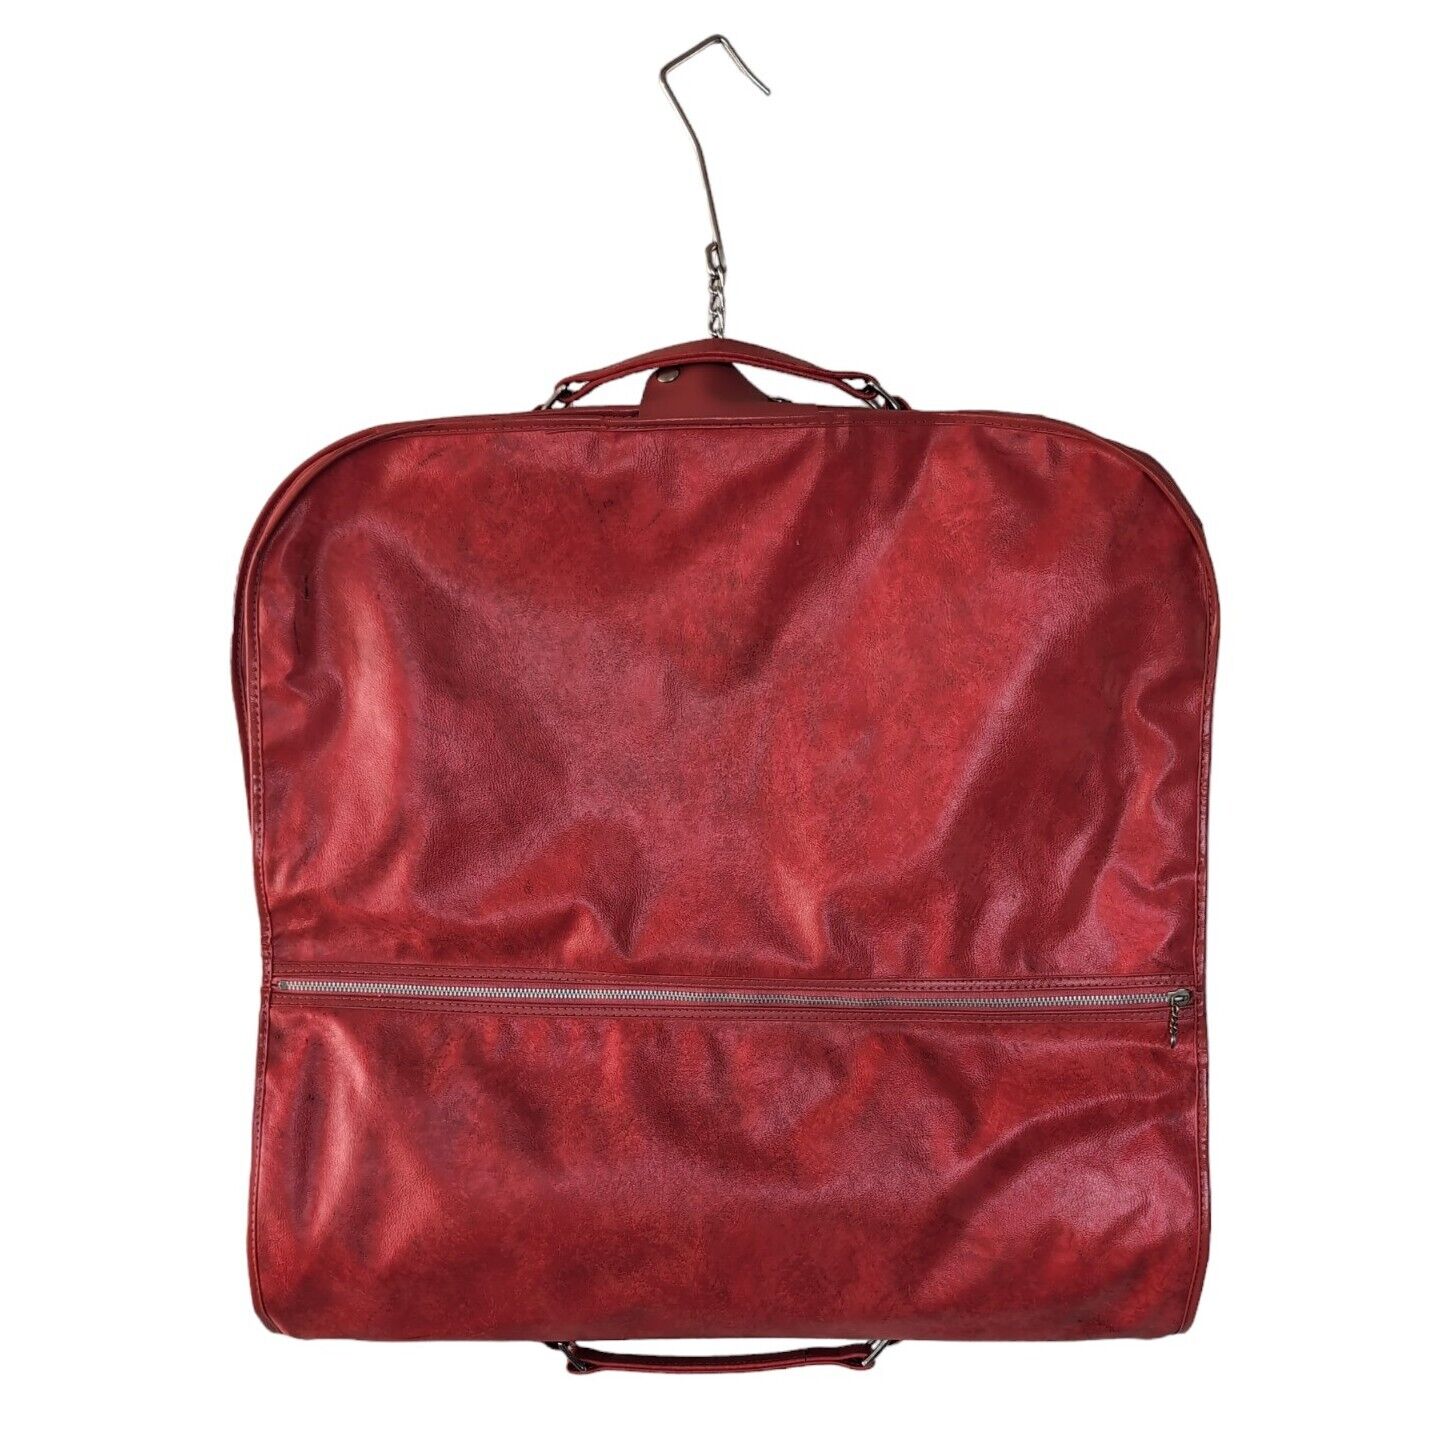 Rare Vintage Samsonite Garment Bag Luggage Leather Red Pockets Weekend Travel